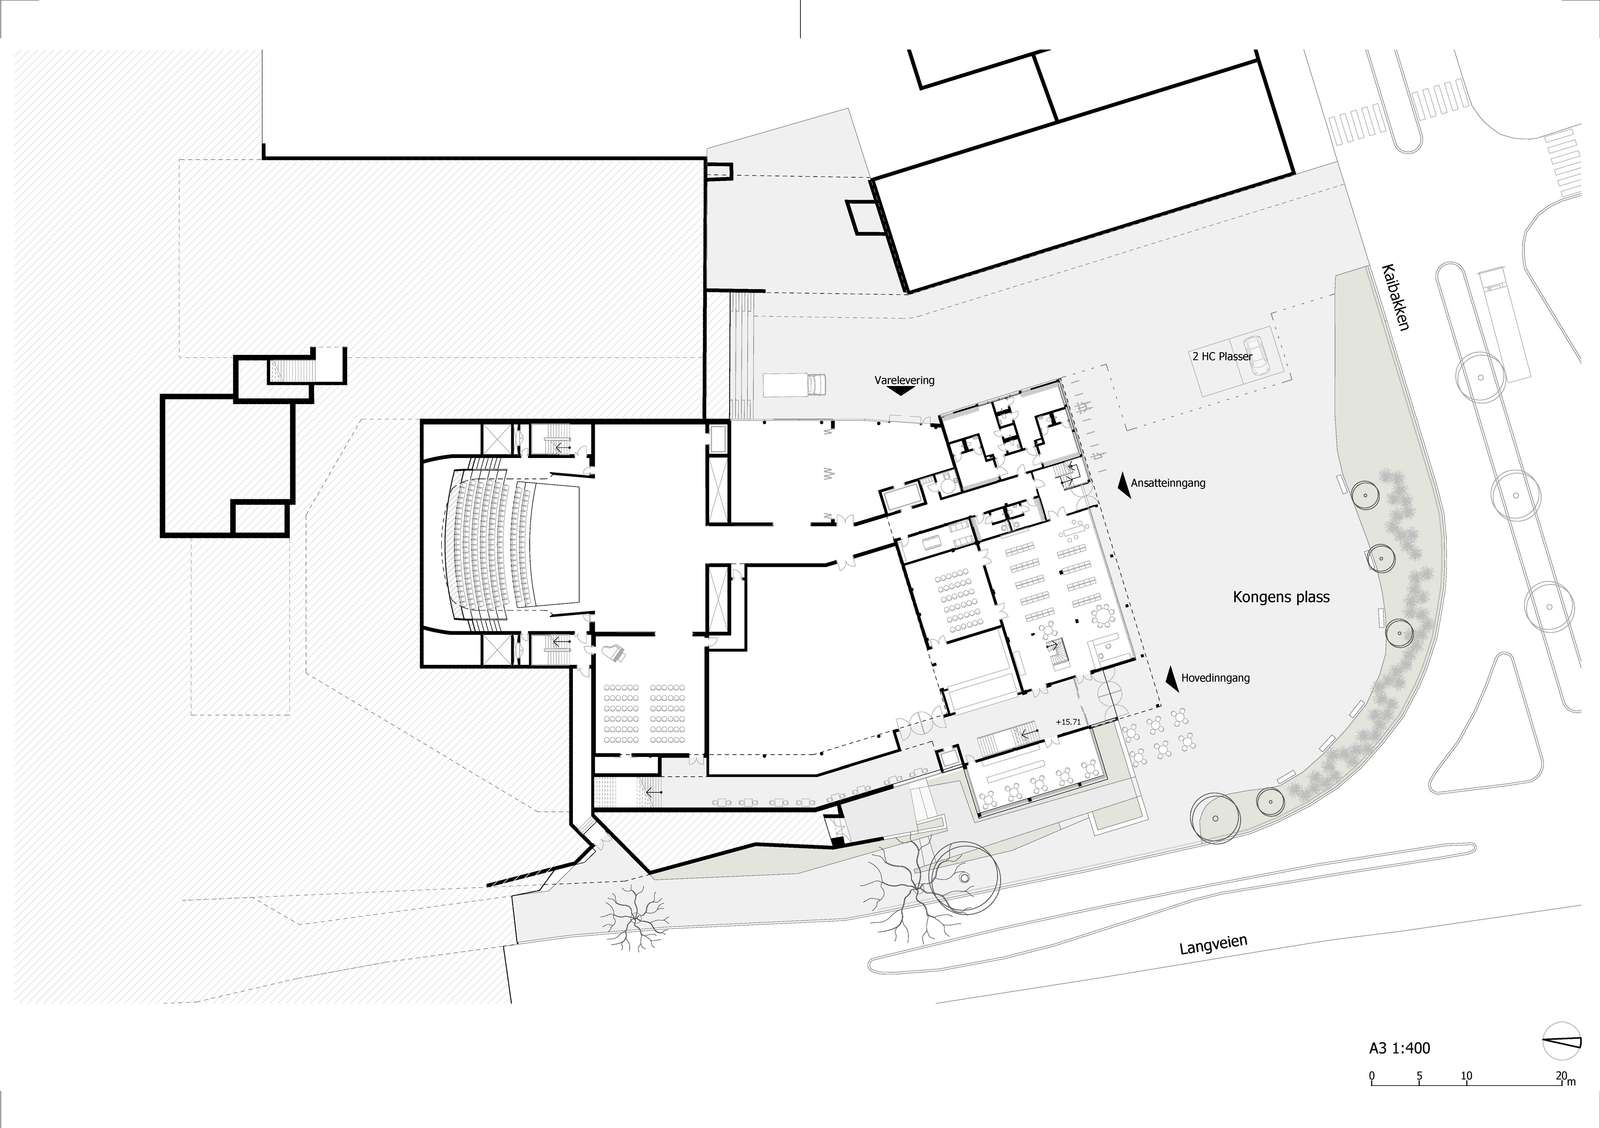 Plan Basement Kristiansund Opera and Culture Centre C.F. Møller Architects